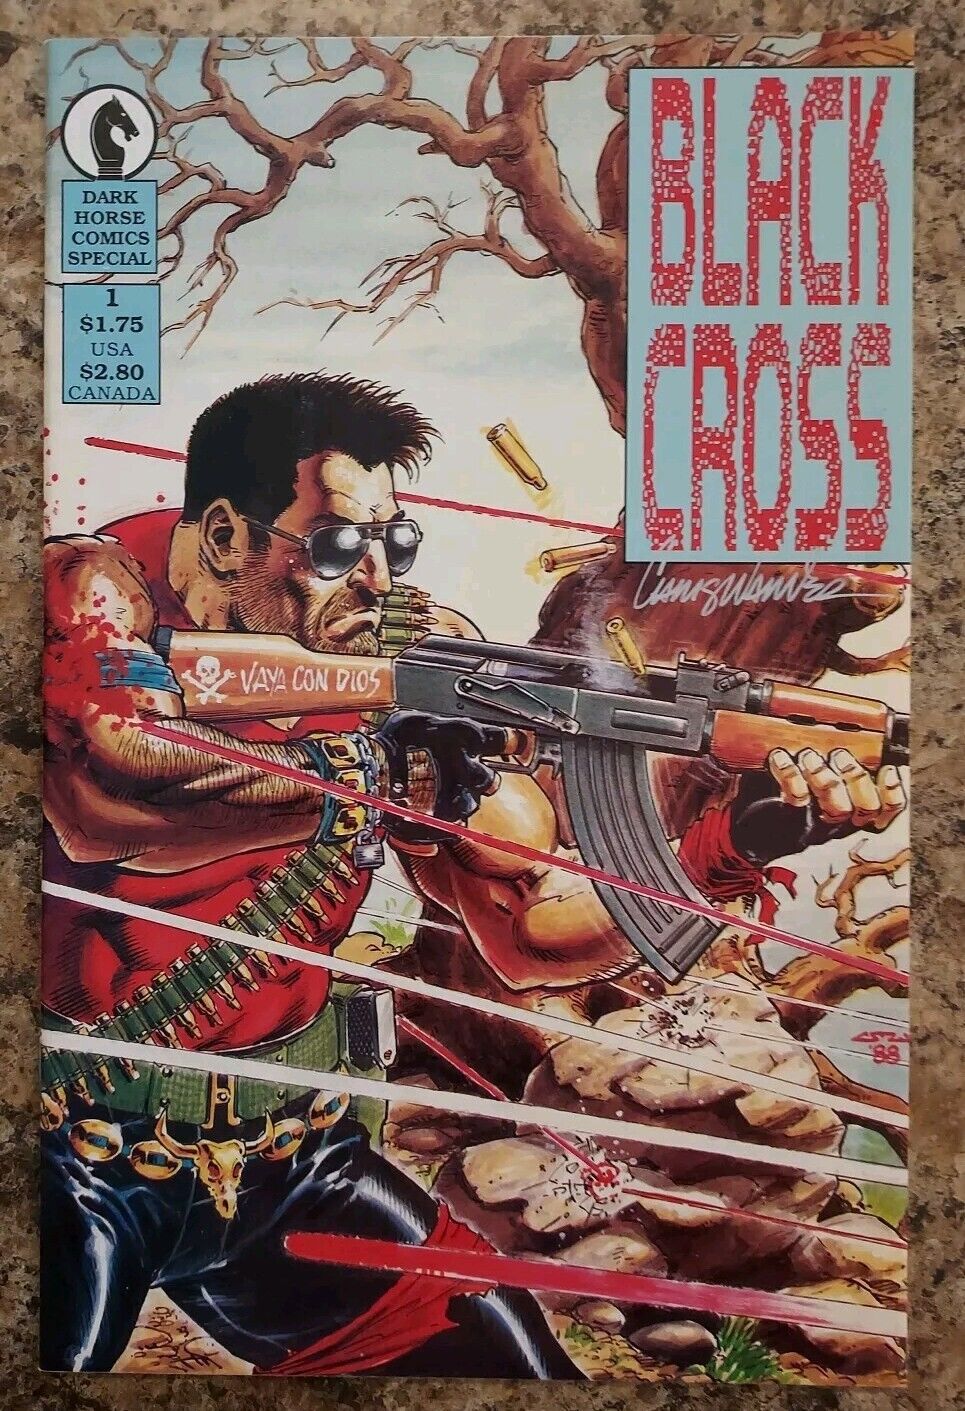 Black Cross #1 Special 2nd Print 1988, Dark Horse Comics SIGNED BY CHRIS WARNER